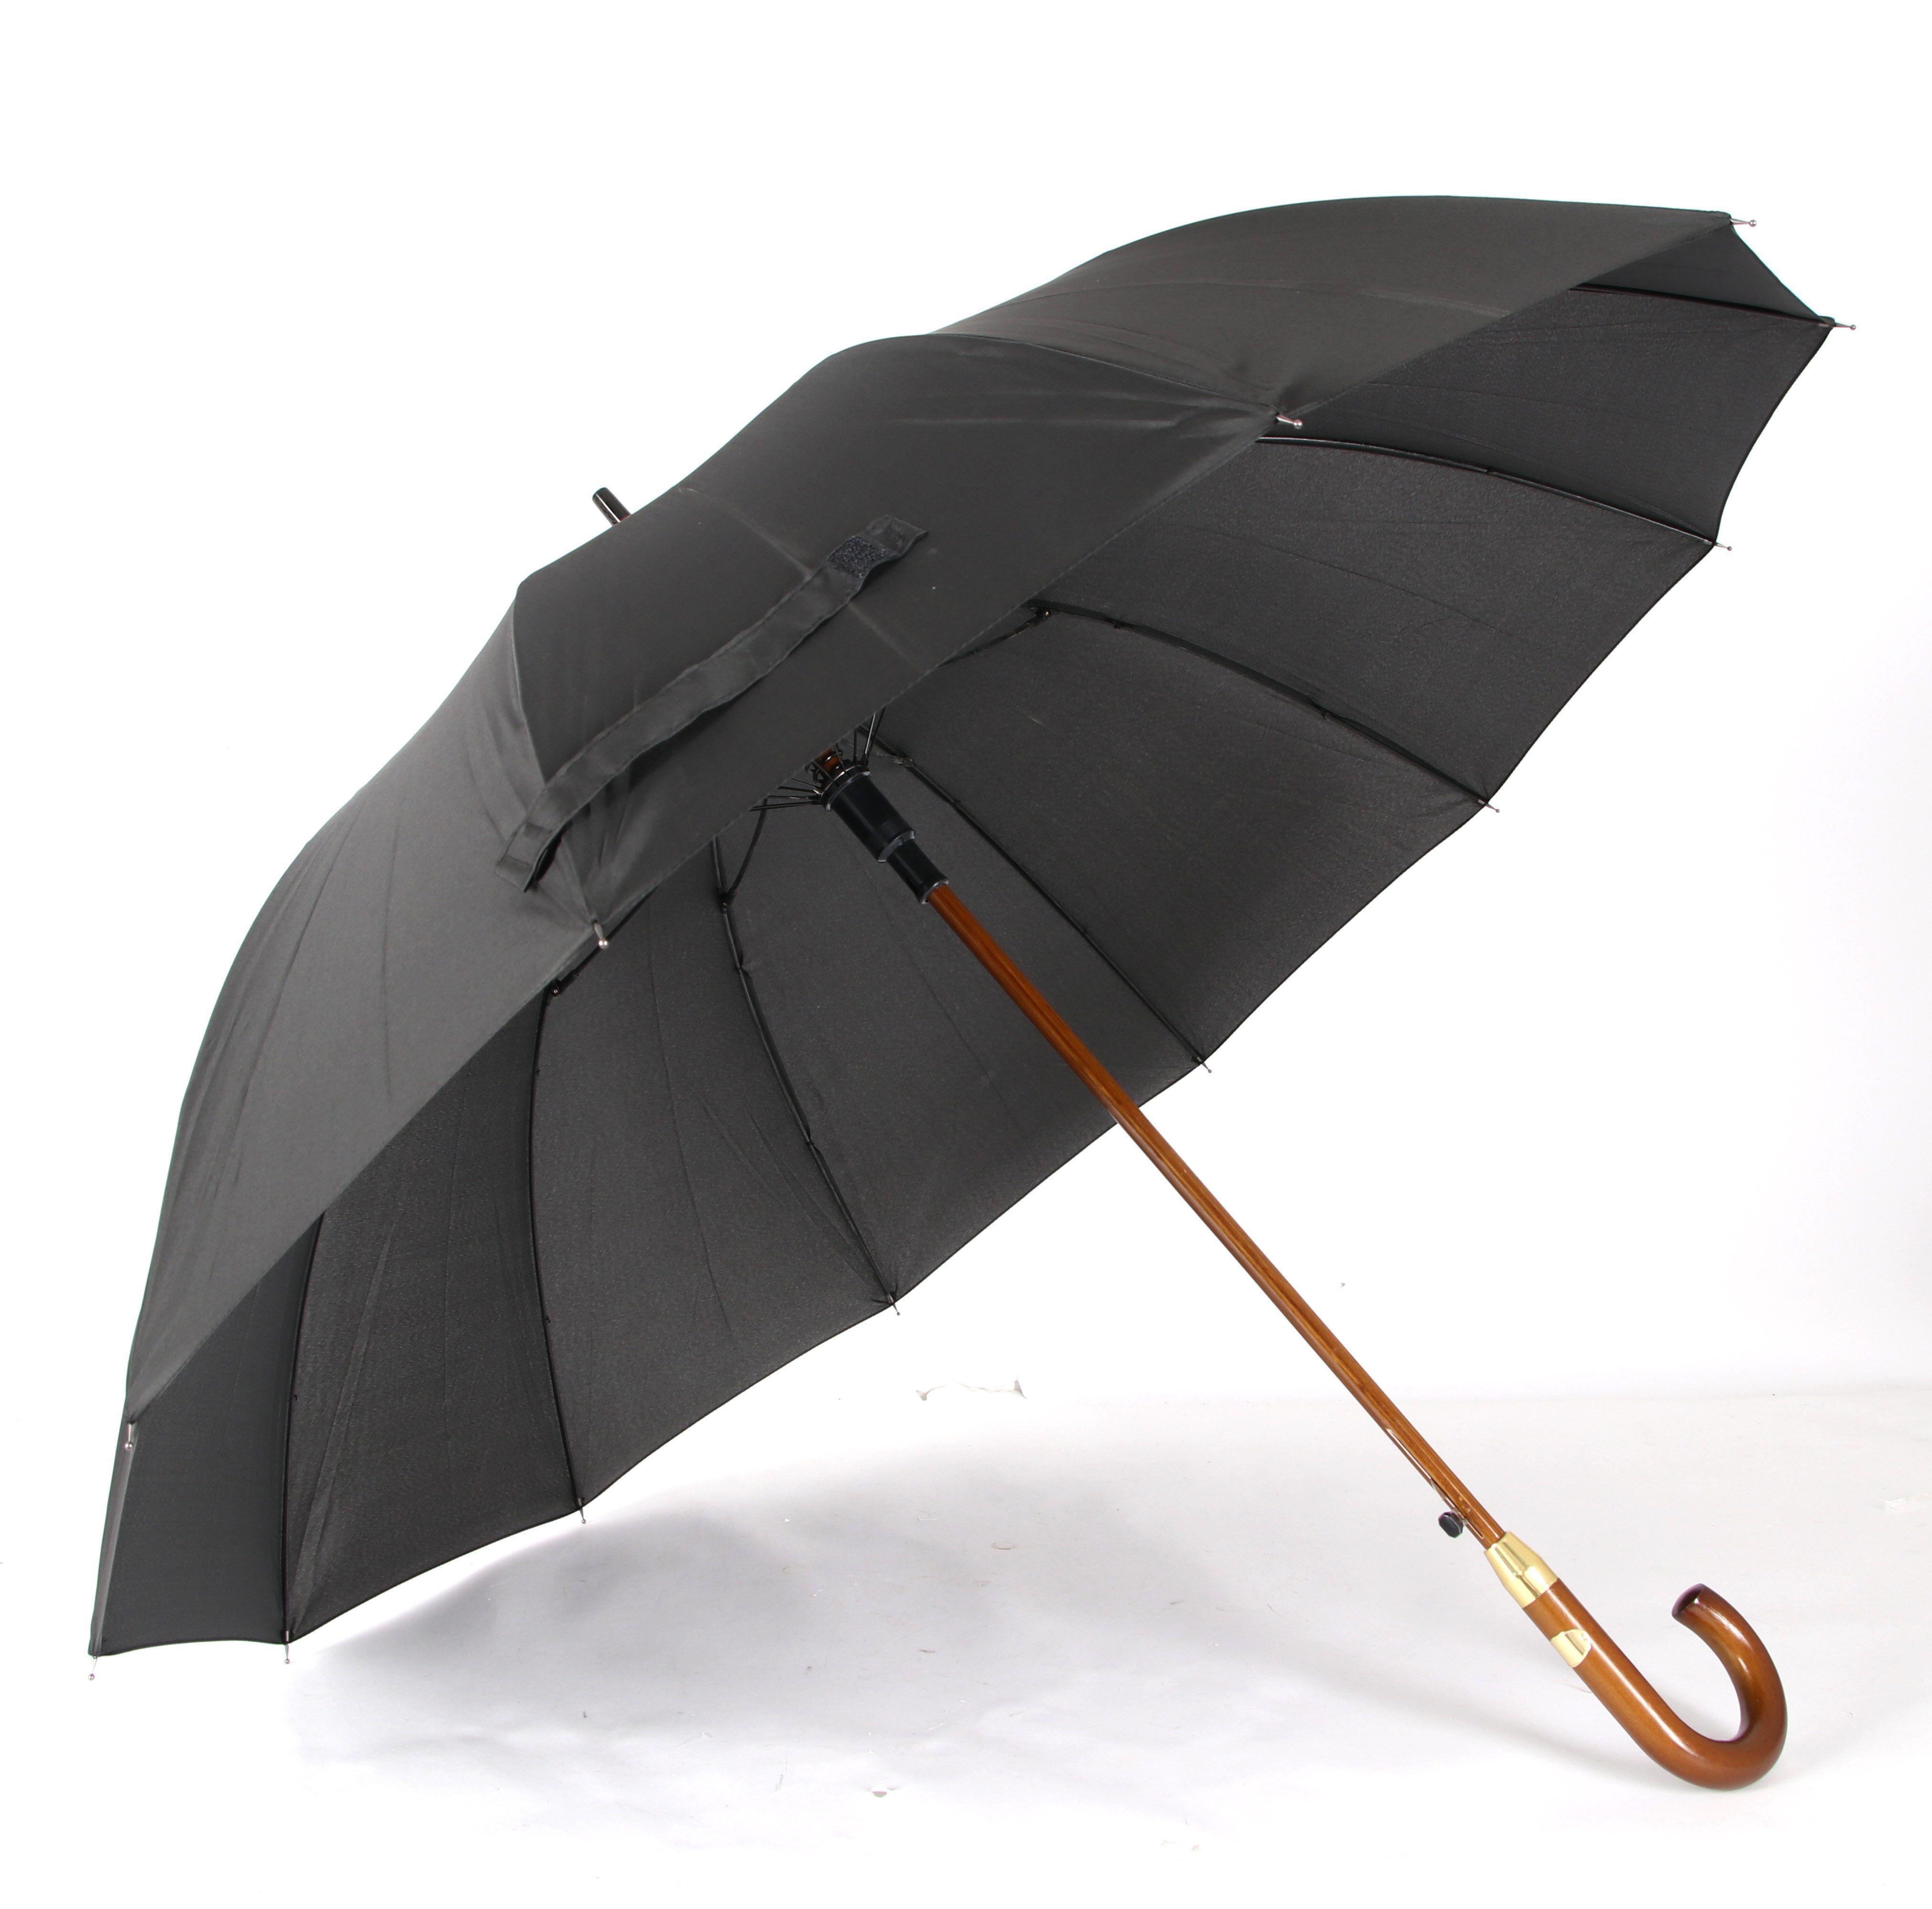 COFI 1453 Stockregenschirm Holzstockschirm ergomoischer Regenschirm flexibel und widerstandsfähig